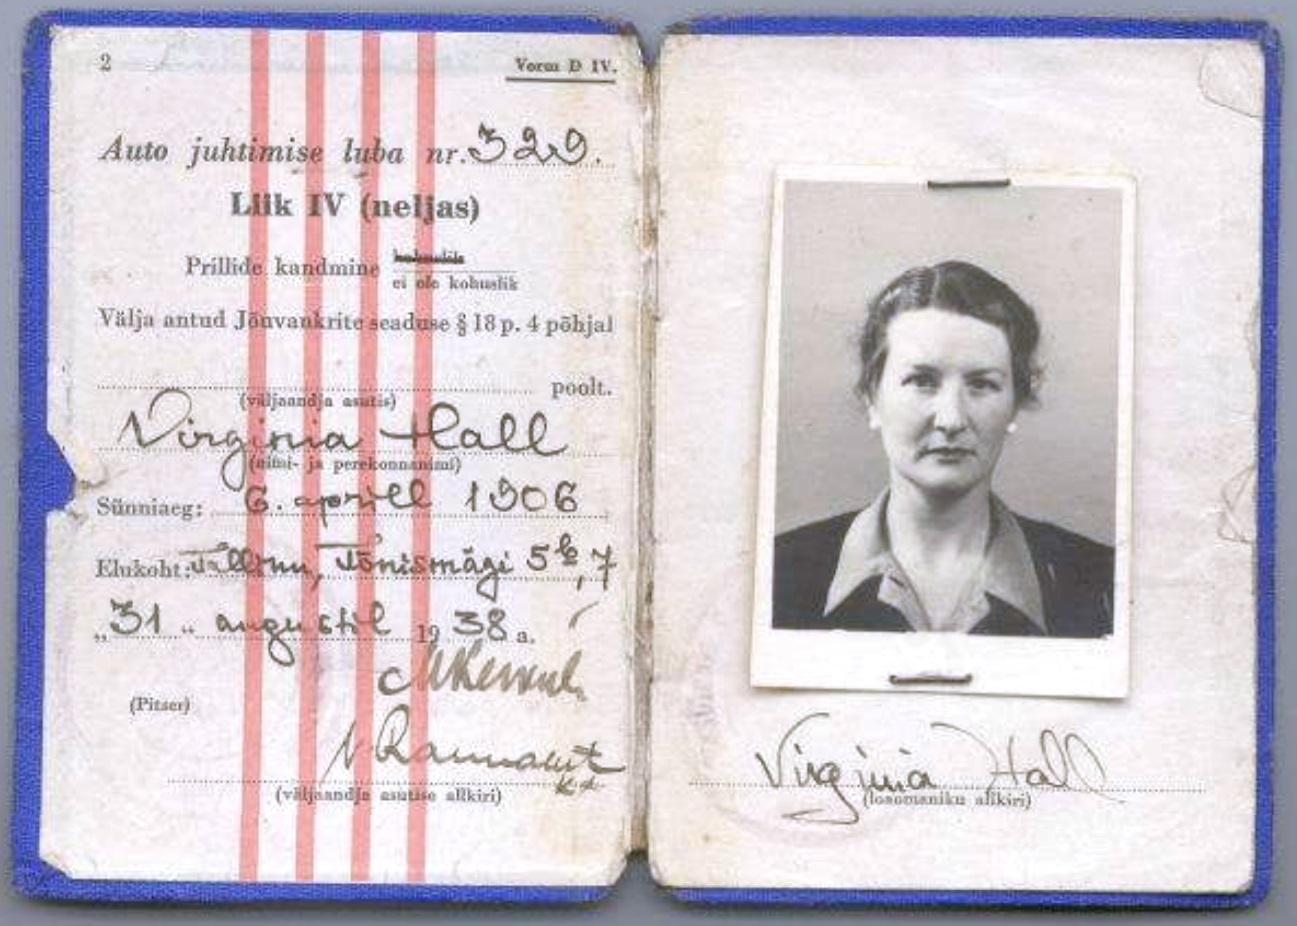 Estonian drivers license for Virginia Hall, 1938.